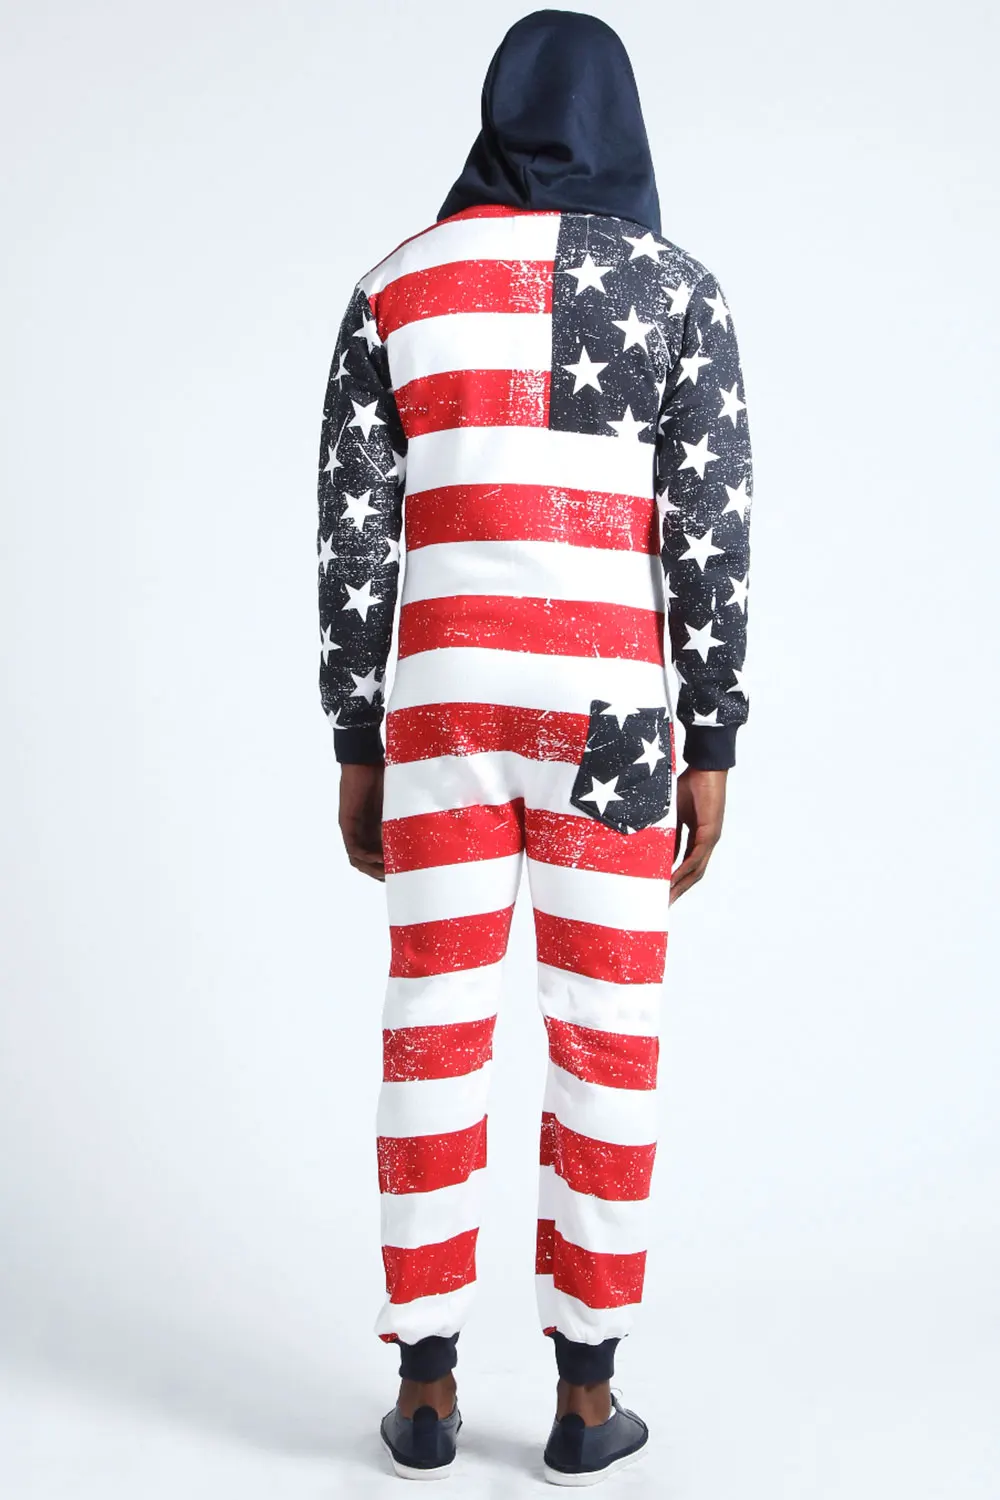 All Over American Flag Men's Onesie Pajamas With Hood - Buy Men's ...